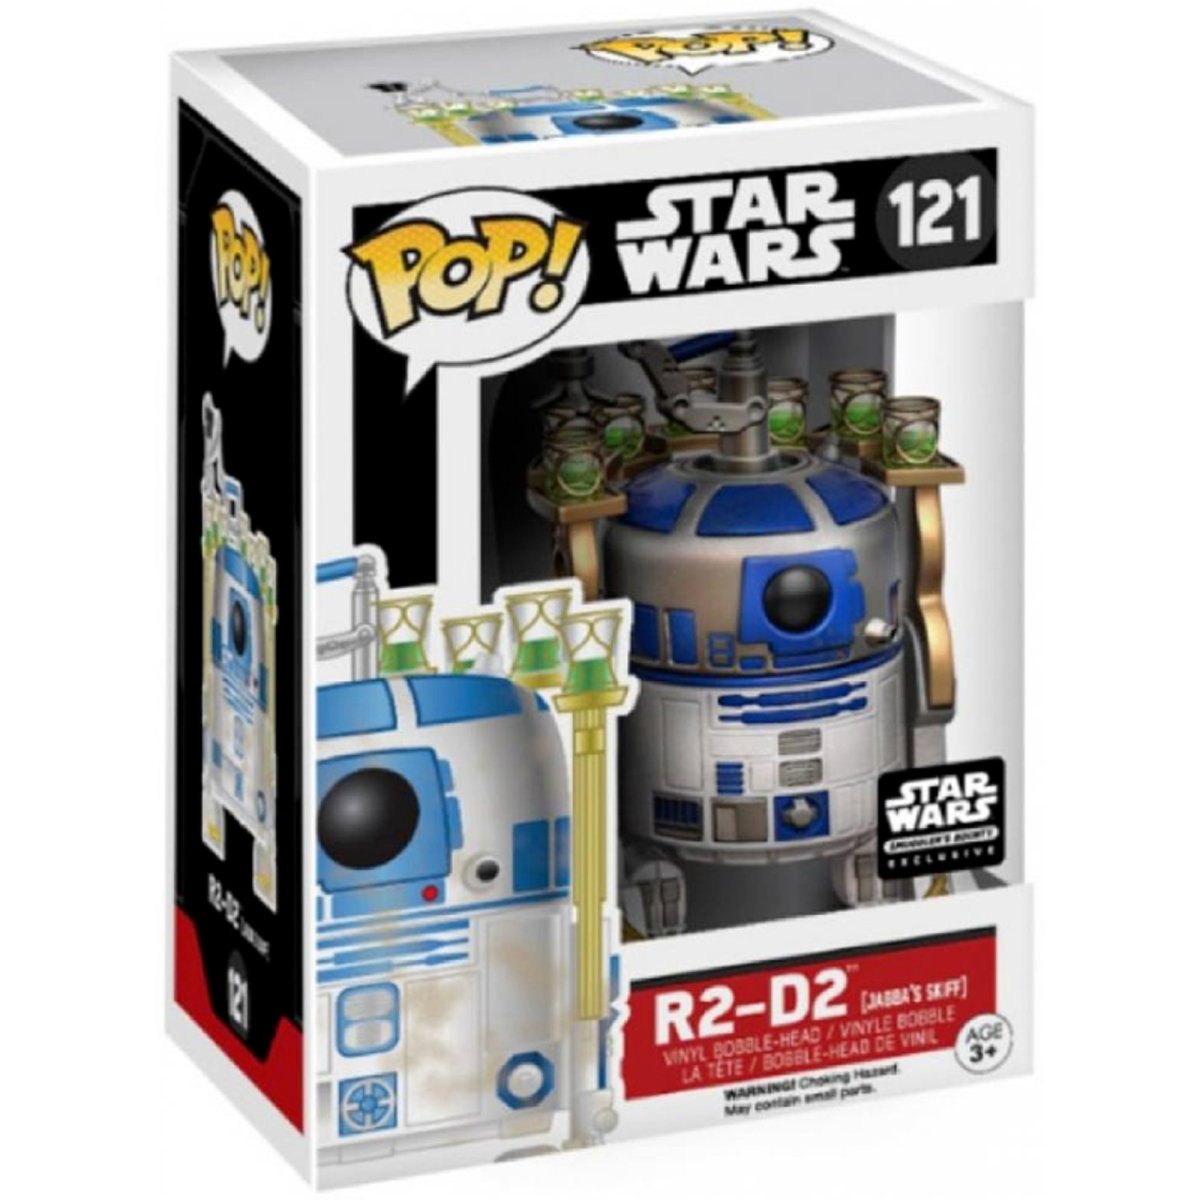 Star Wars - R2-D2 [Jabba's Skiff] (Smuggler's Bounty Exclusive) #121 - Funko Pop! Vinyl Star Wars - Persona Toys